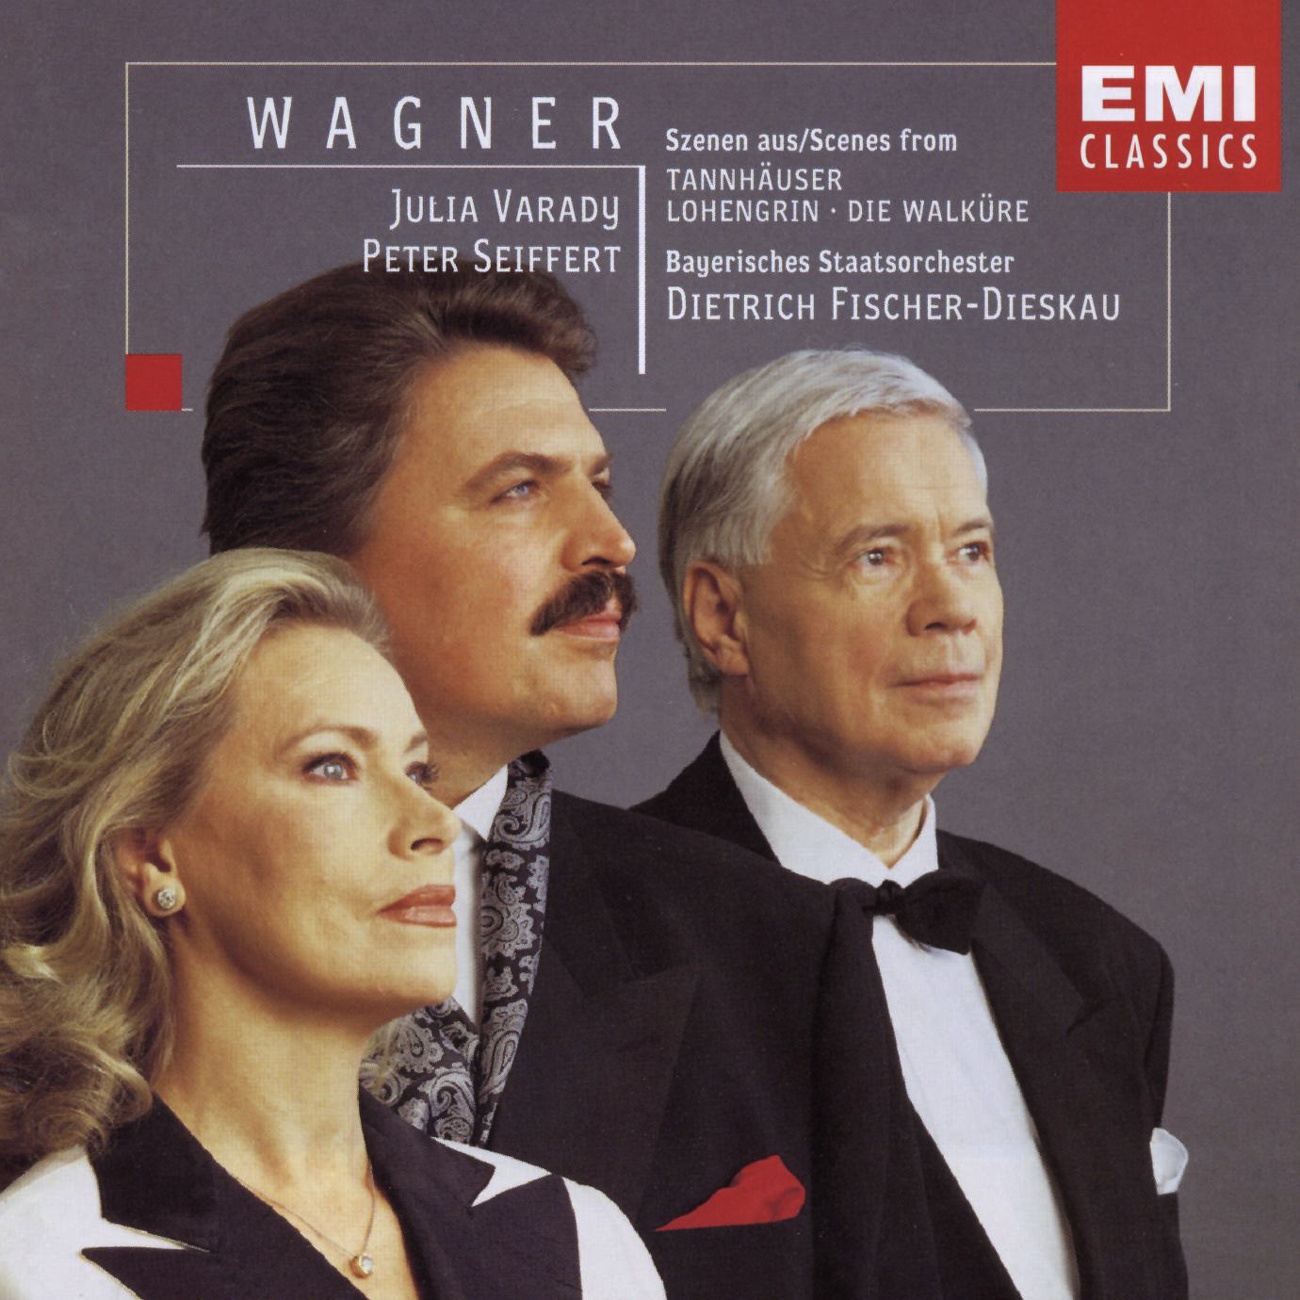 WagnerSzenen, Lohengrin  Oper in 3 Aufzü gen, Dritter Aufzug:  Treulich gefü hrt ziehet dahin Chor